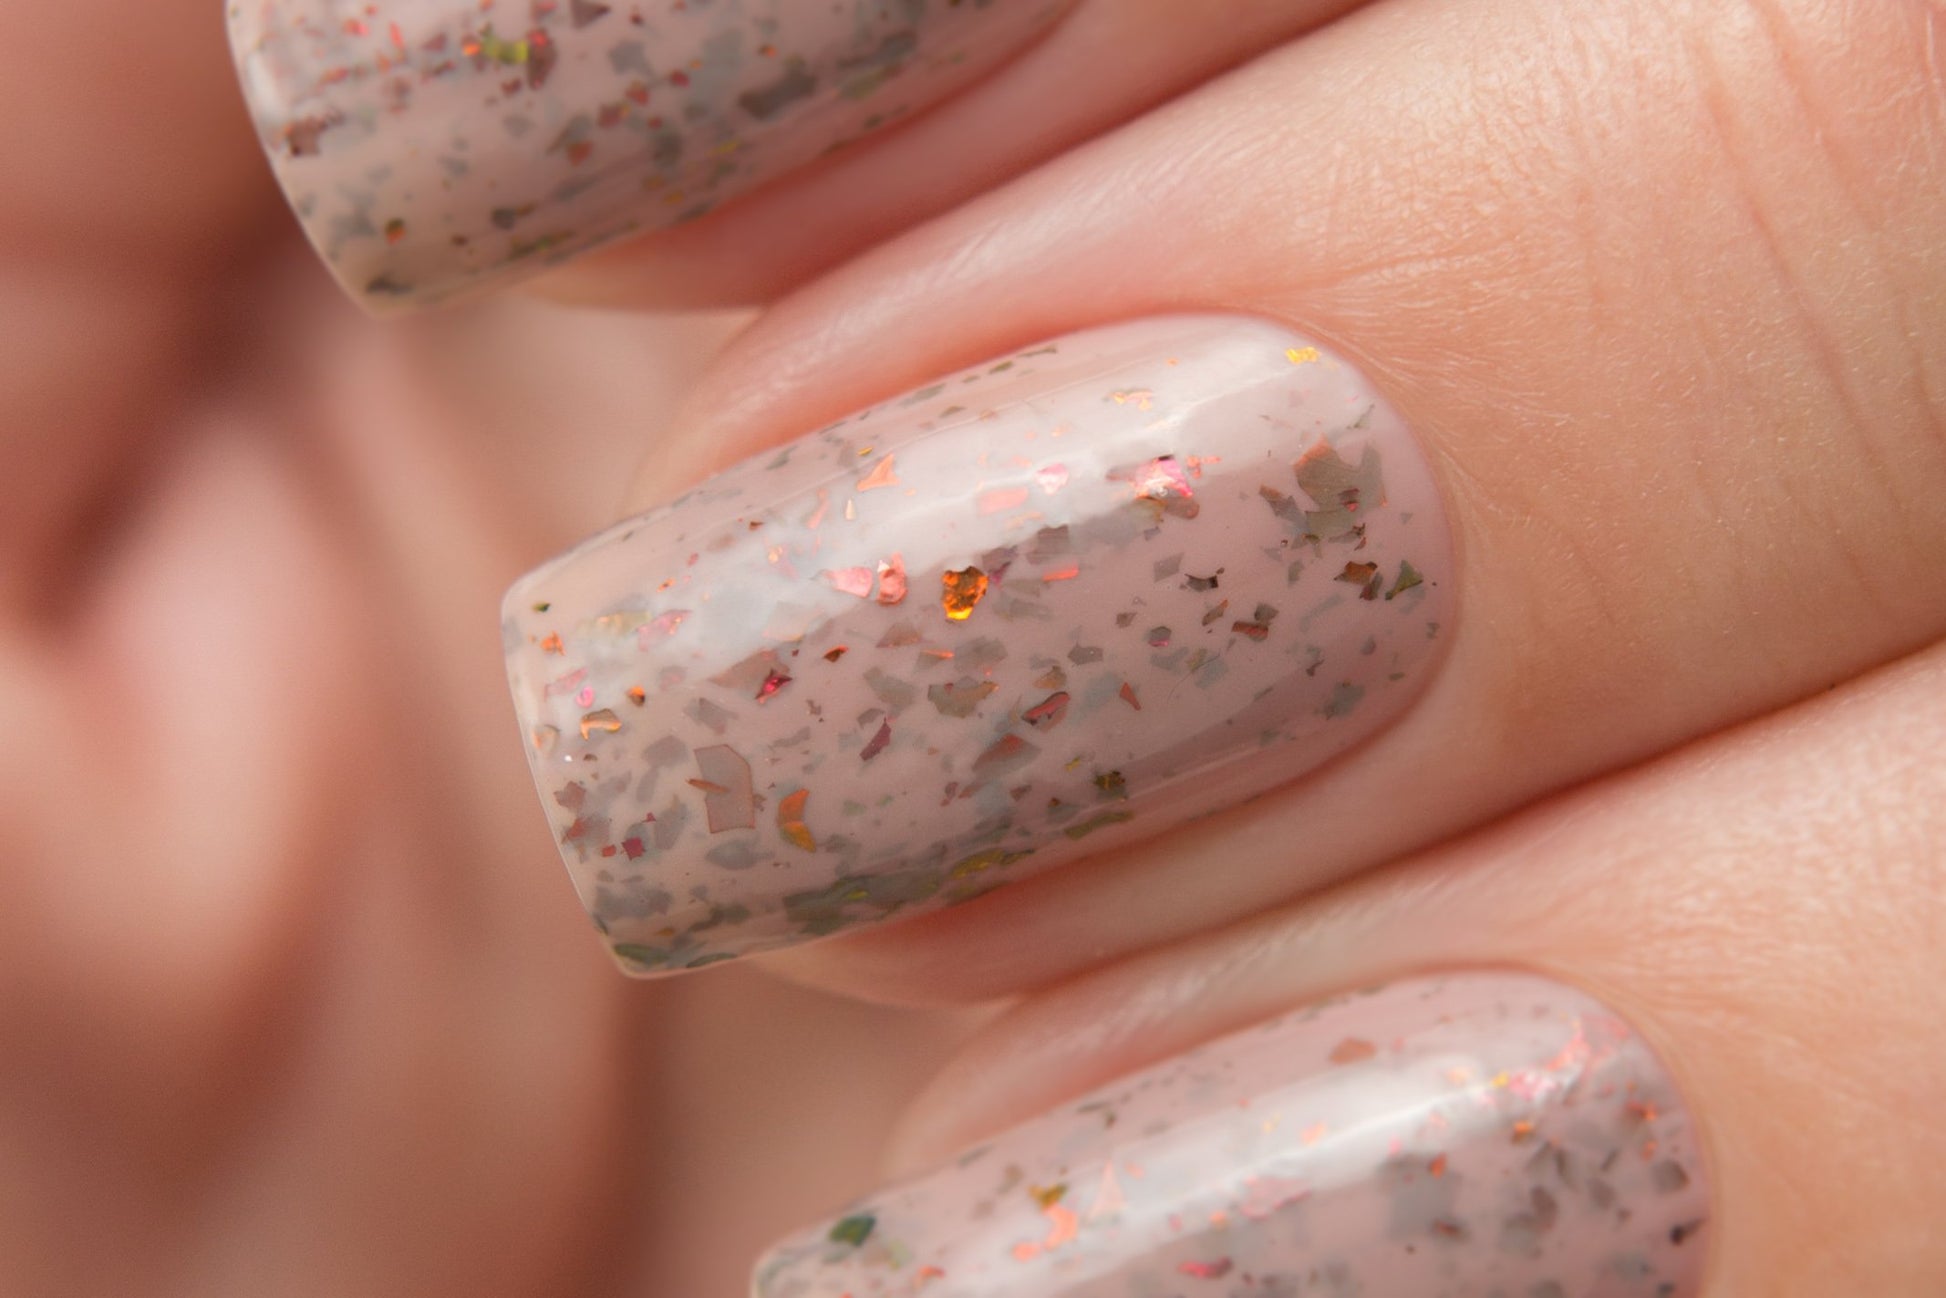 Lollipolish bow polish beige pink dark grey thermal nail polish - Shapes